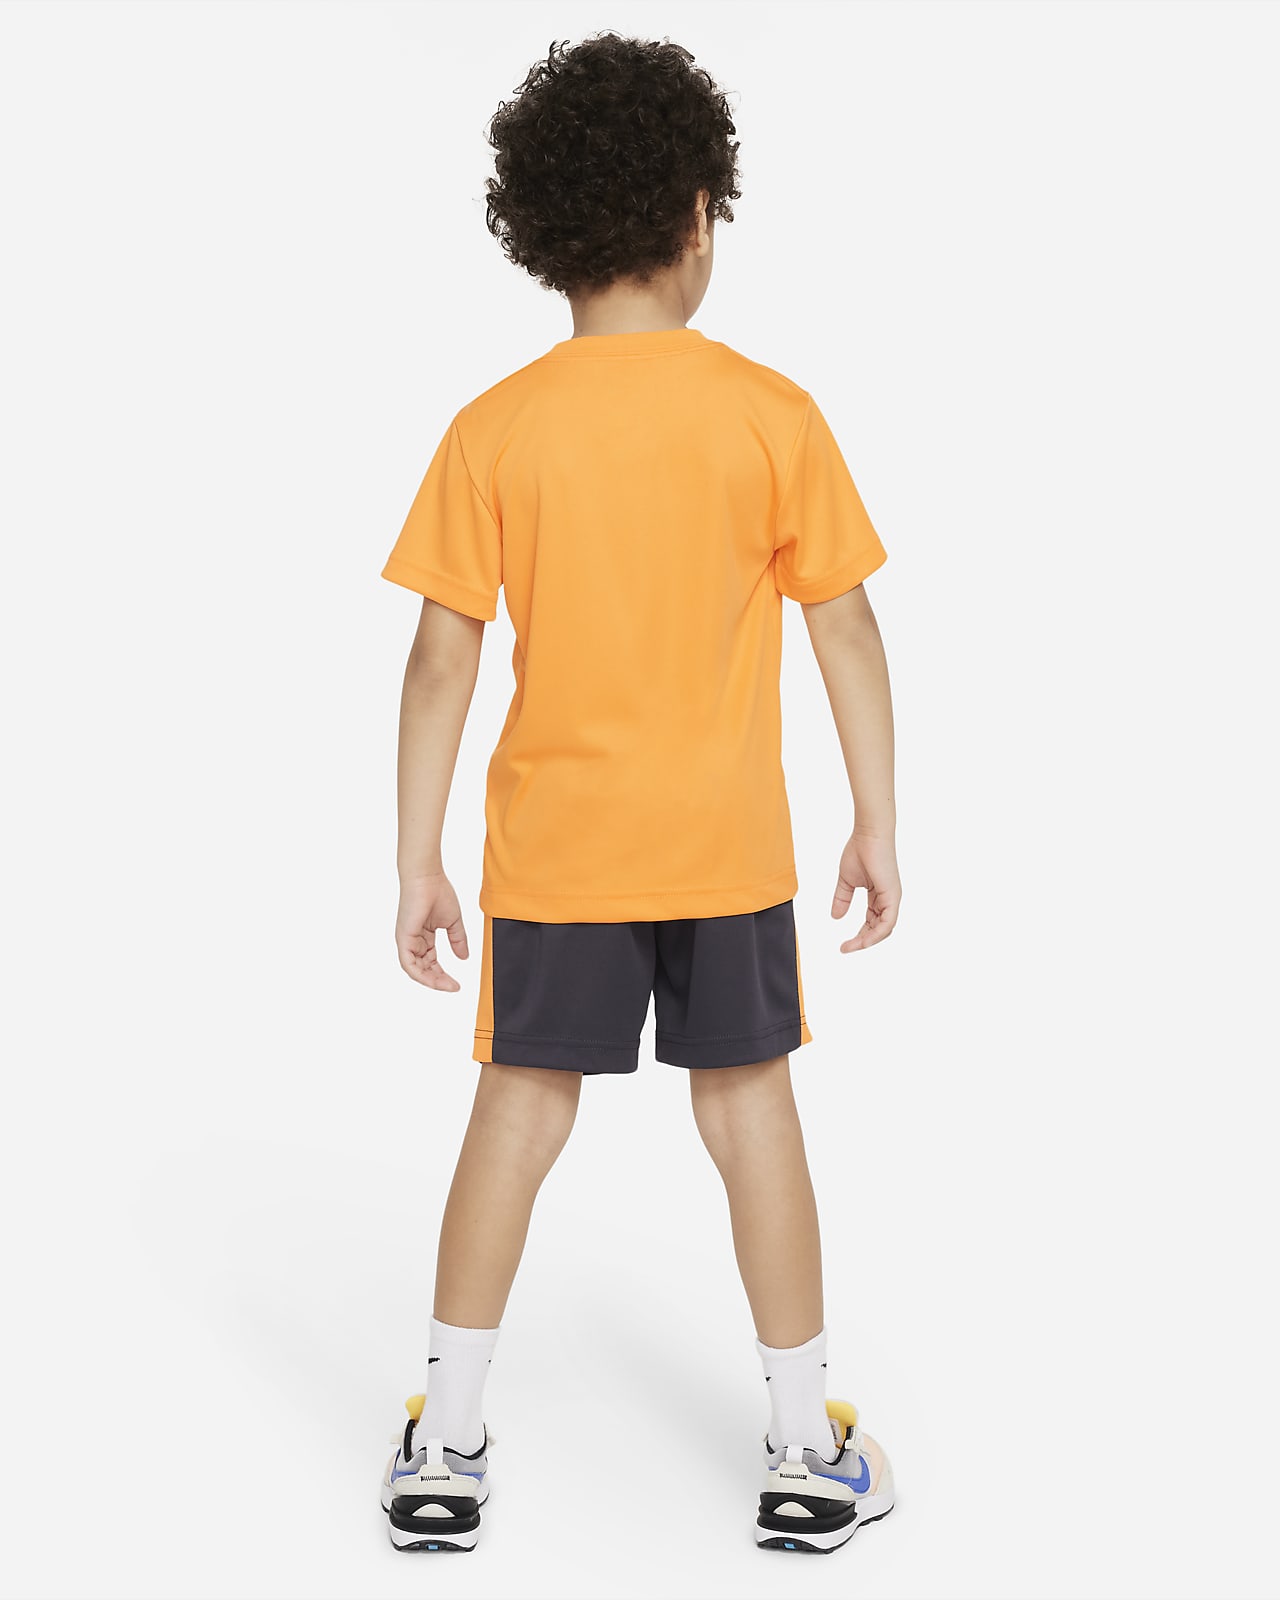 Nike Dri-FIT Little Kids' T-Shirt and Shorts Set